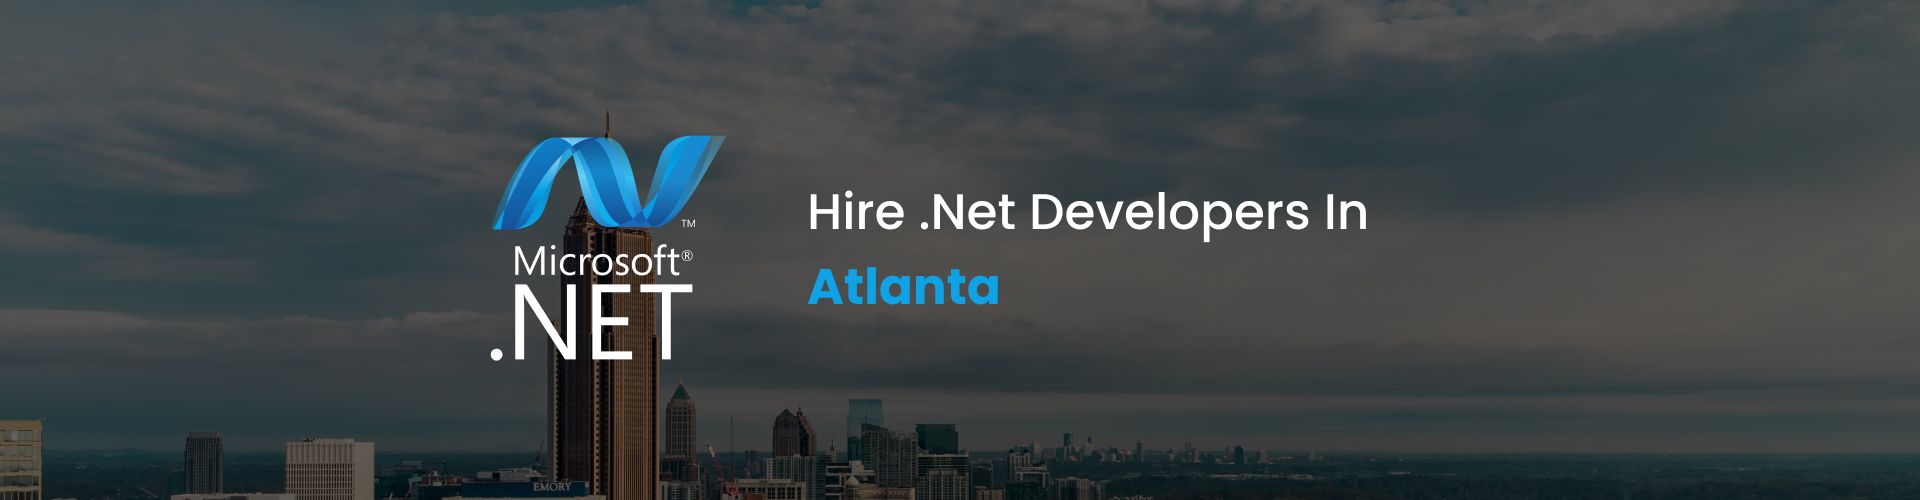 hire dot net developers in atlanta